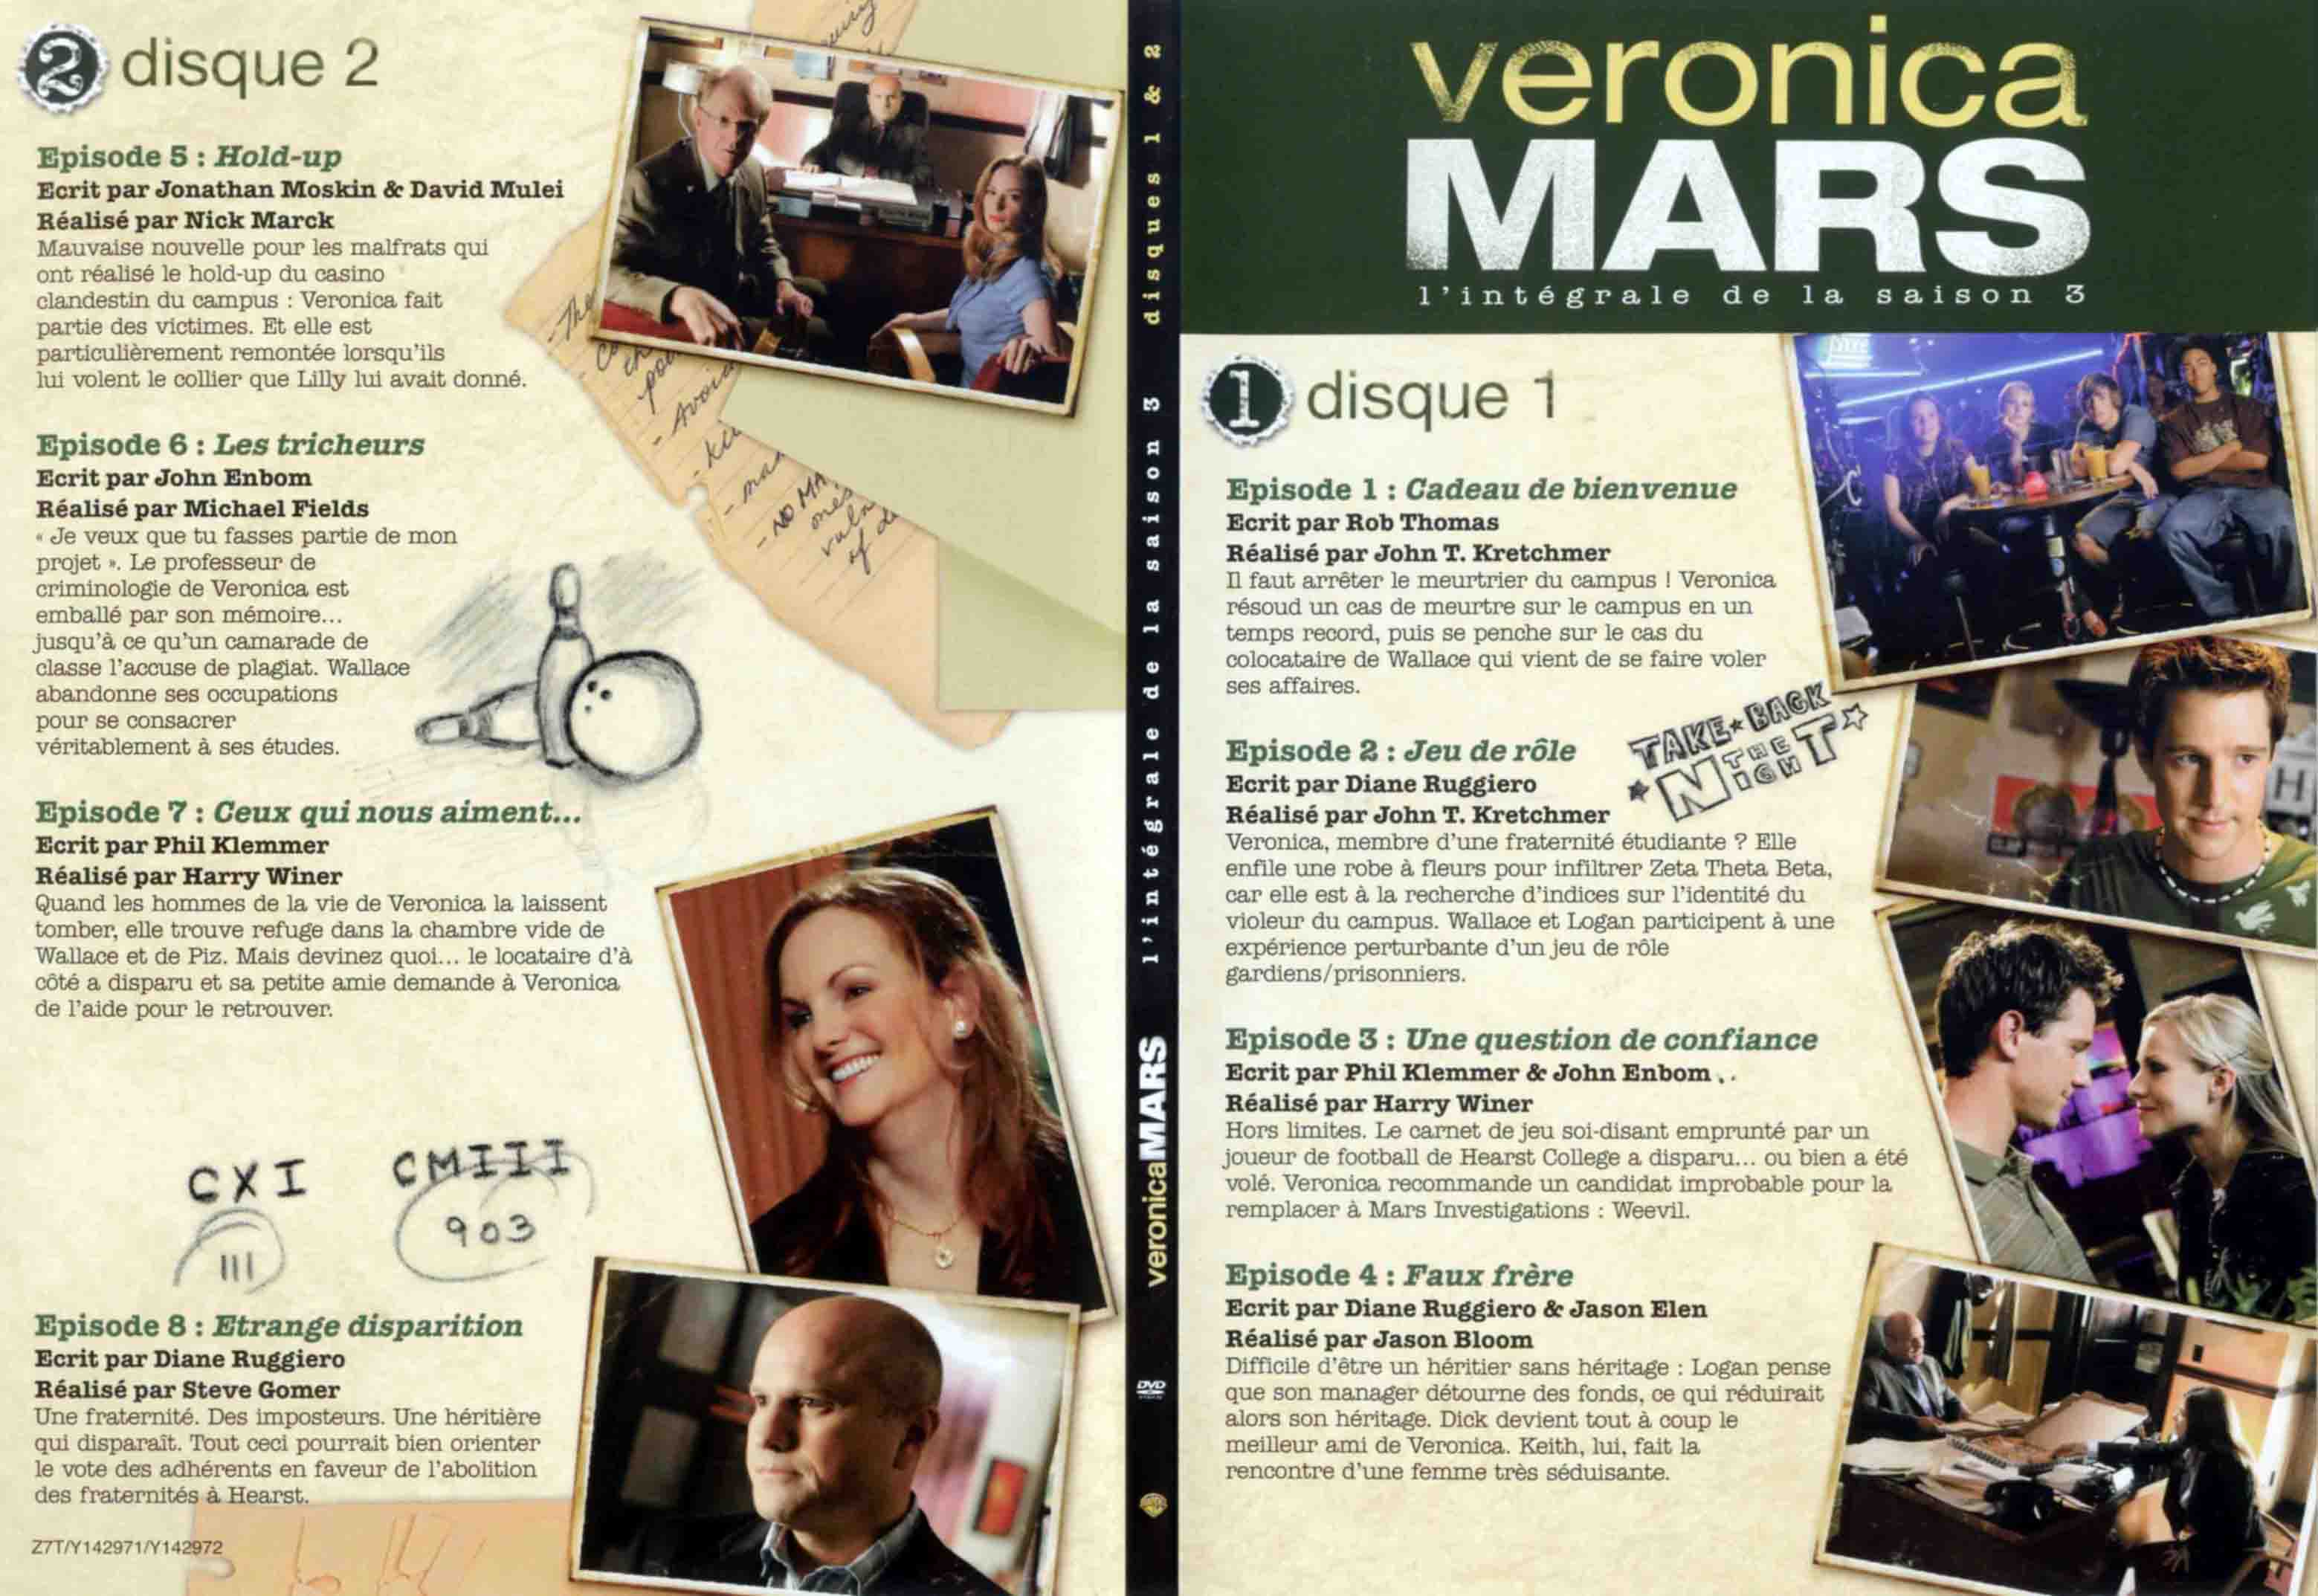 Jaquette DVD Veronica Mars Saison 3 DVD 1